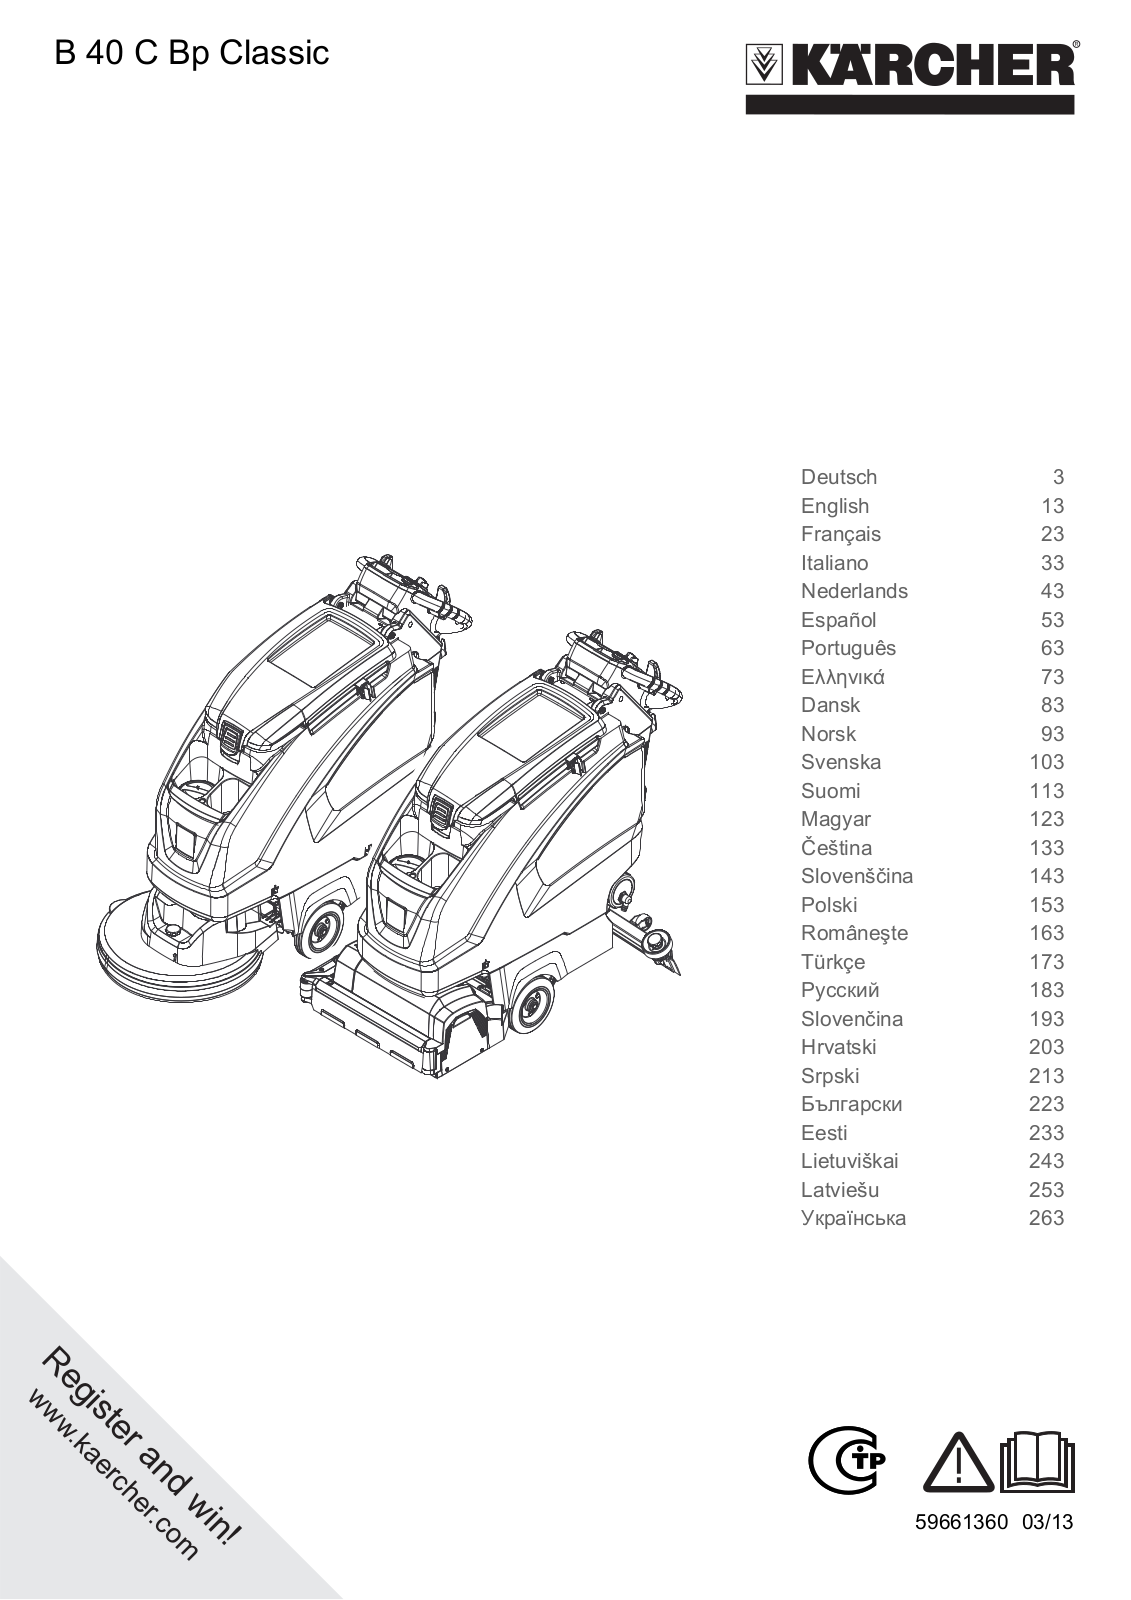 Karcher B 40 C Classic Bp D43 User Manual